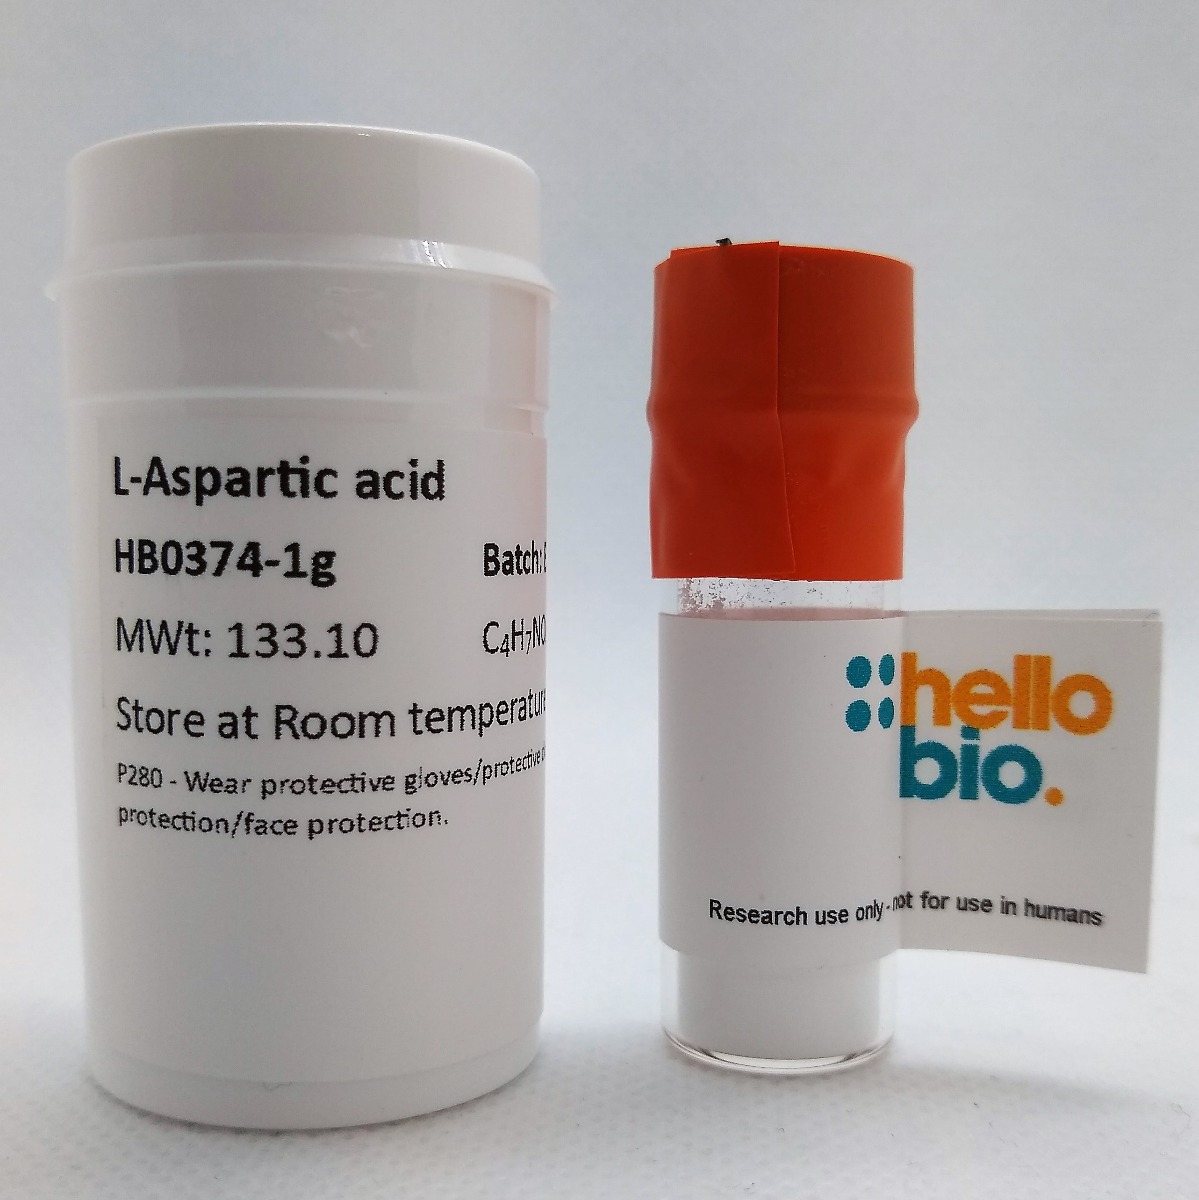 L-Aspartic acid product vial image | Hello Bio